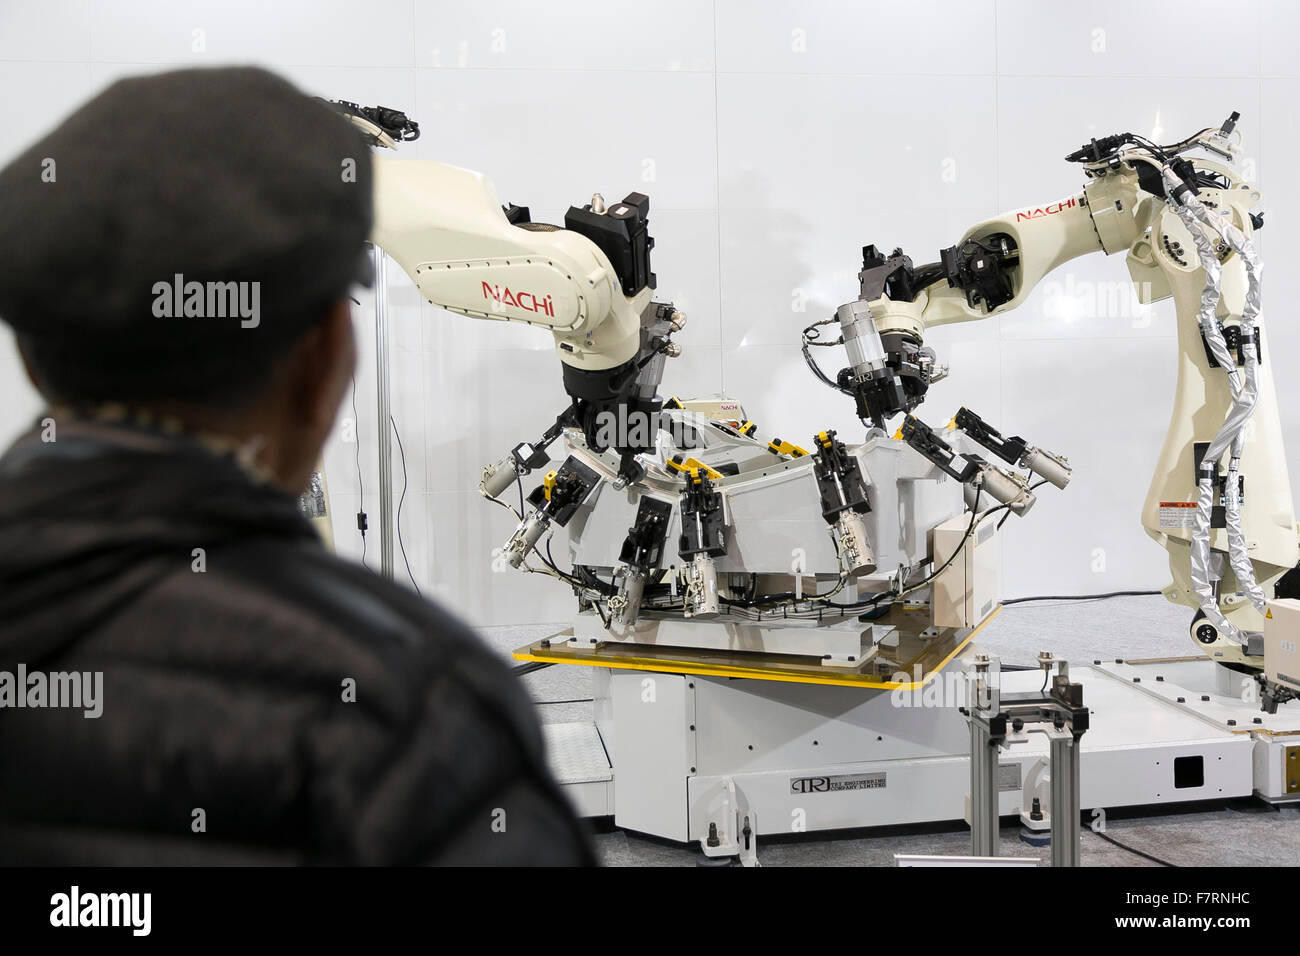 Nachi robot hi-res stock photography and images - Alamy